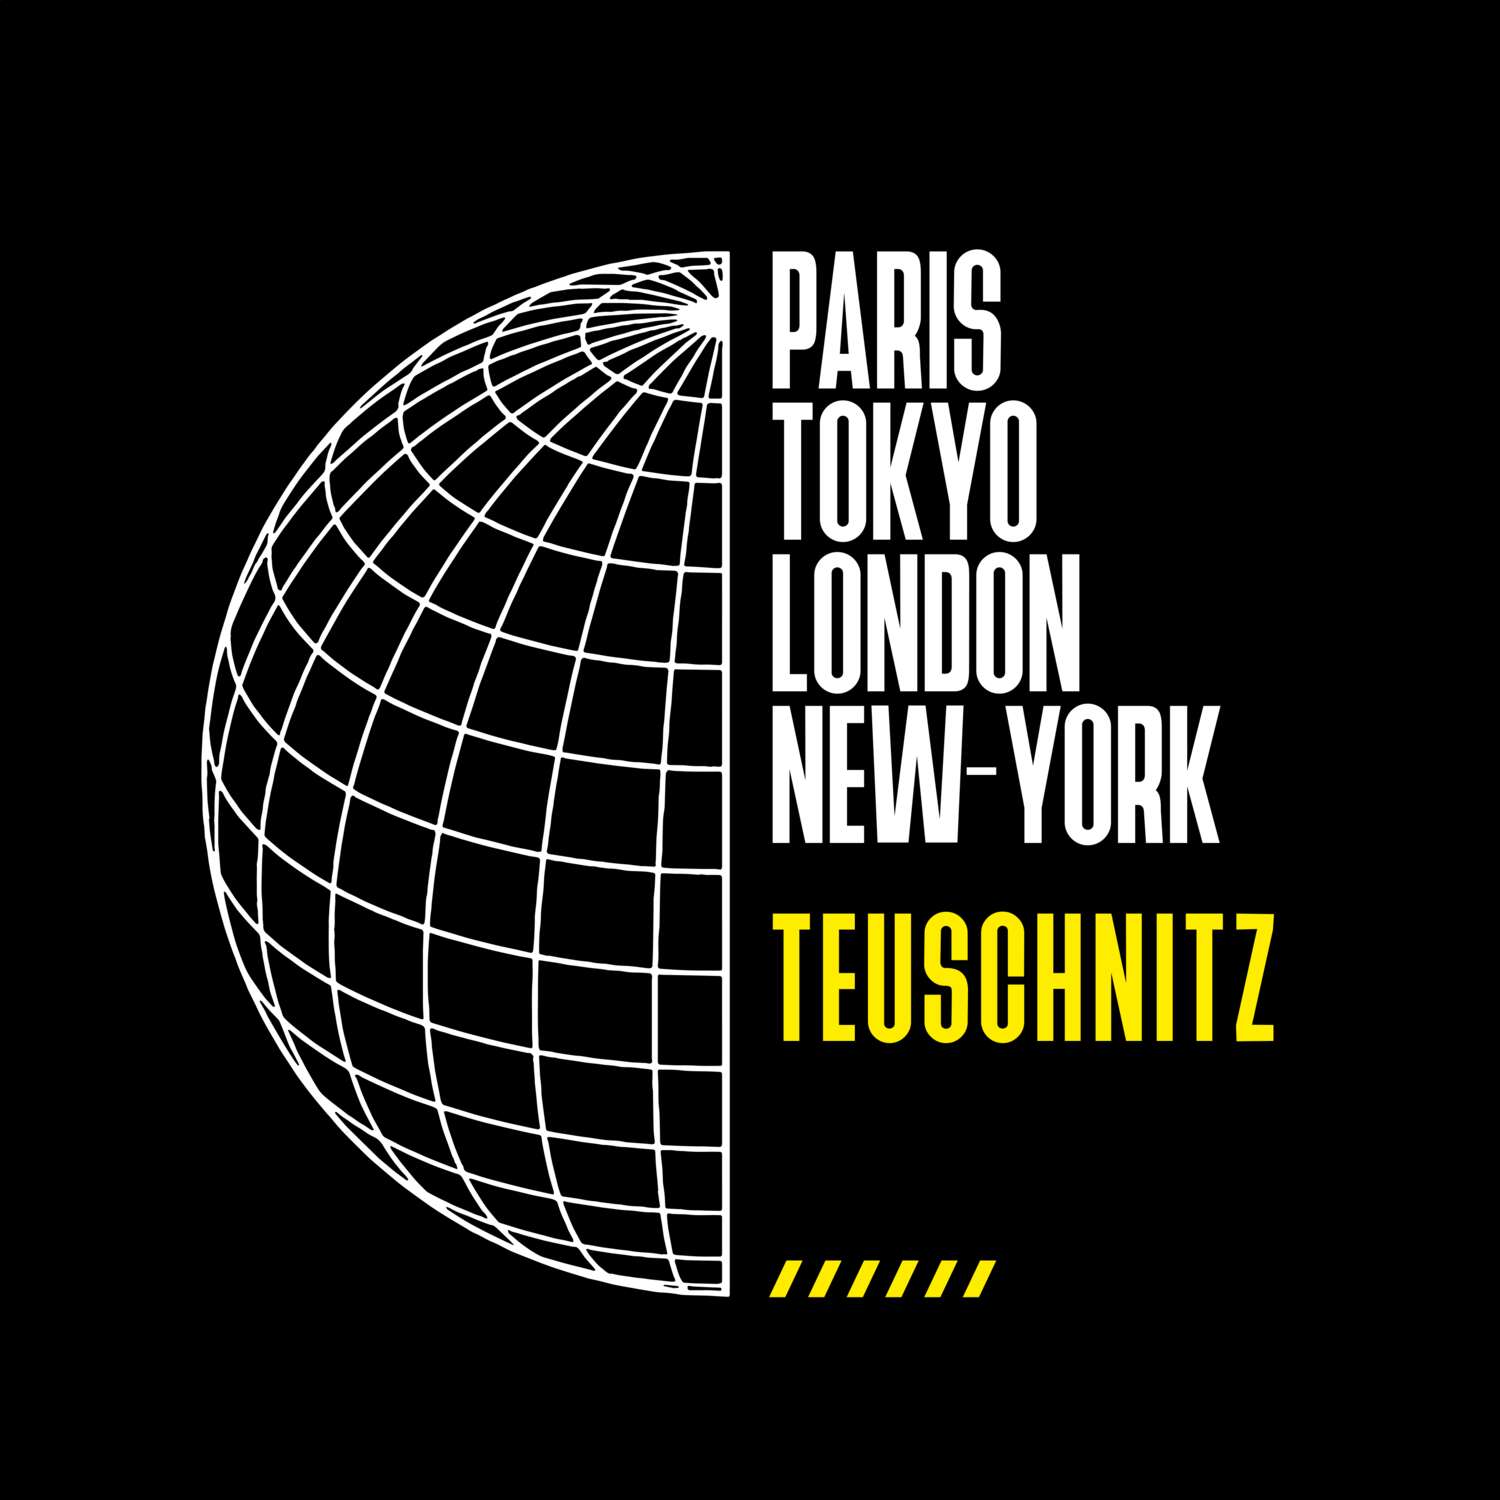 Teuschnitz T-Shirt »Paris Tokyo London«